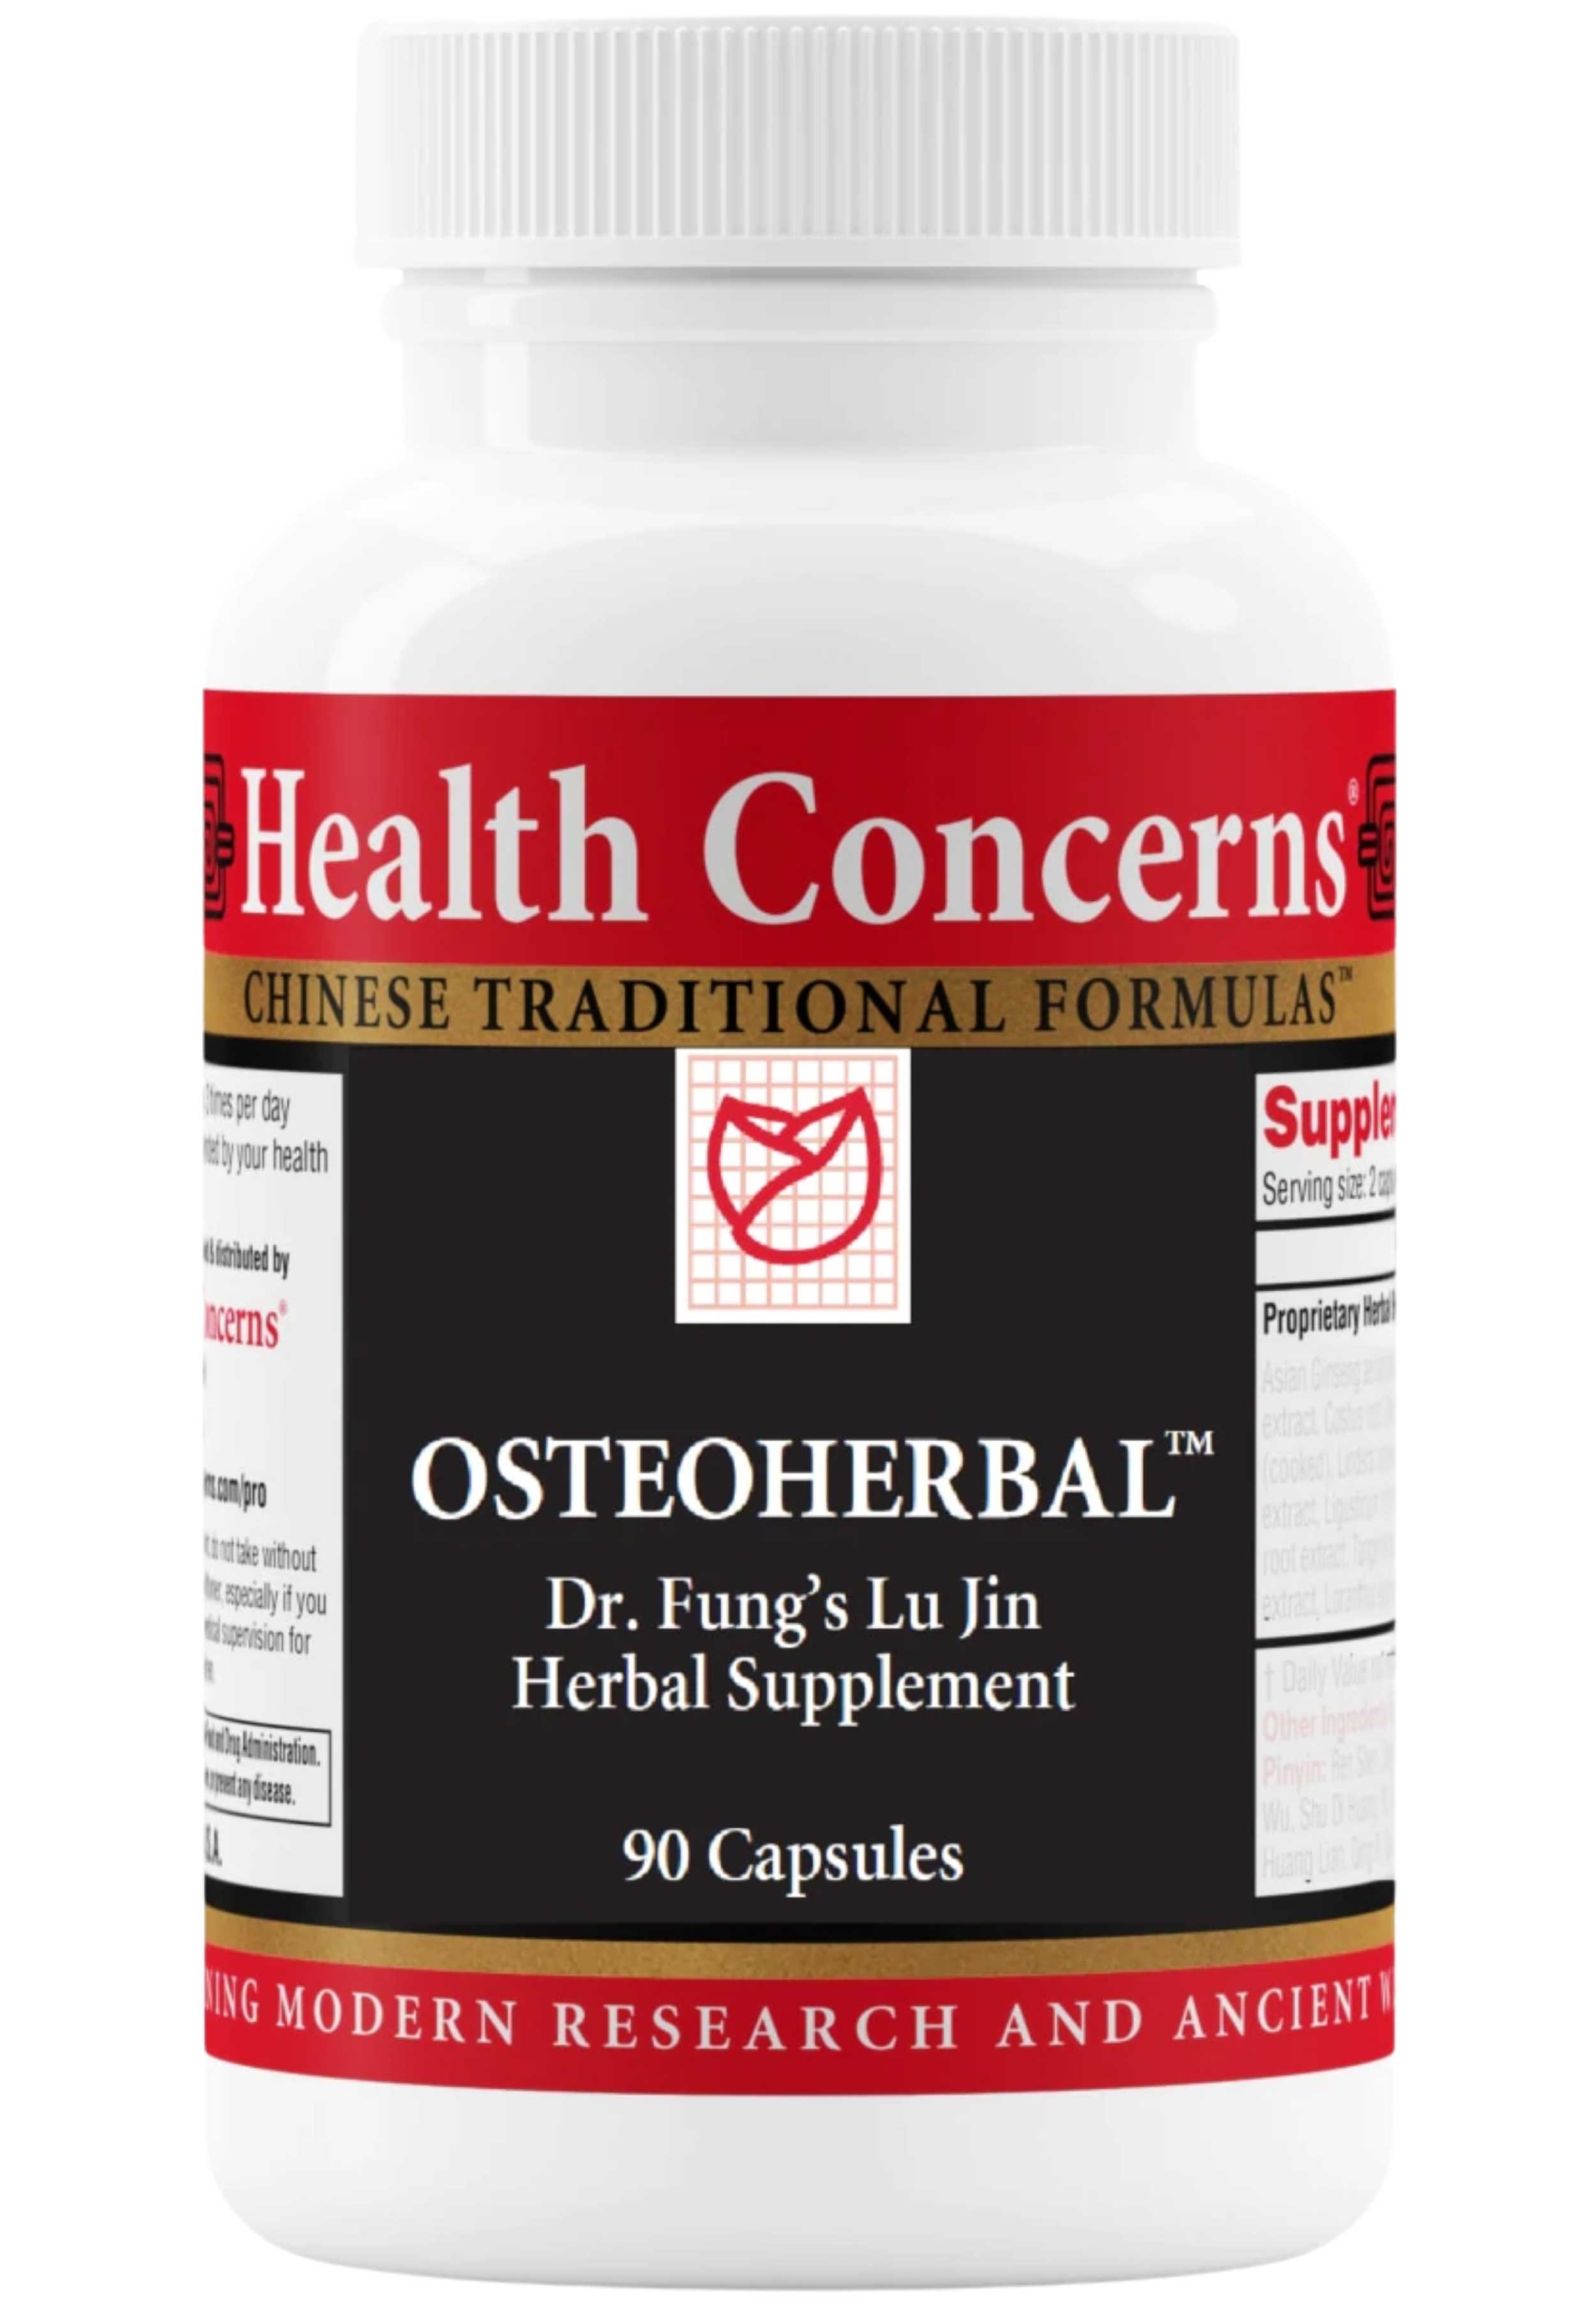 Health Concerns OsteoHerbal